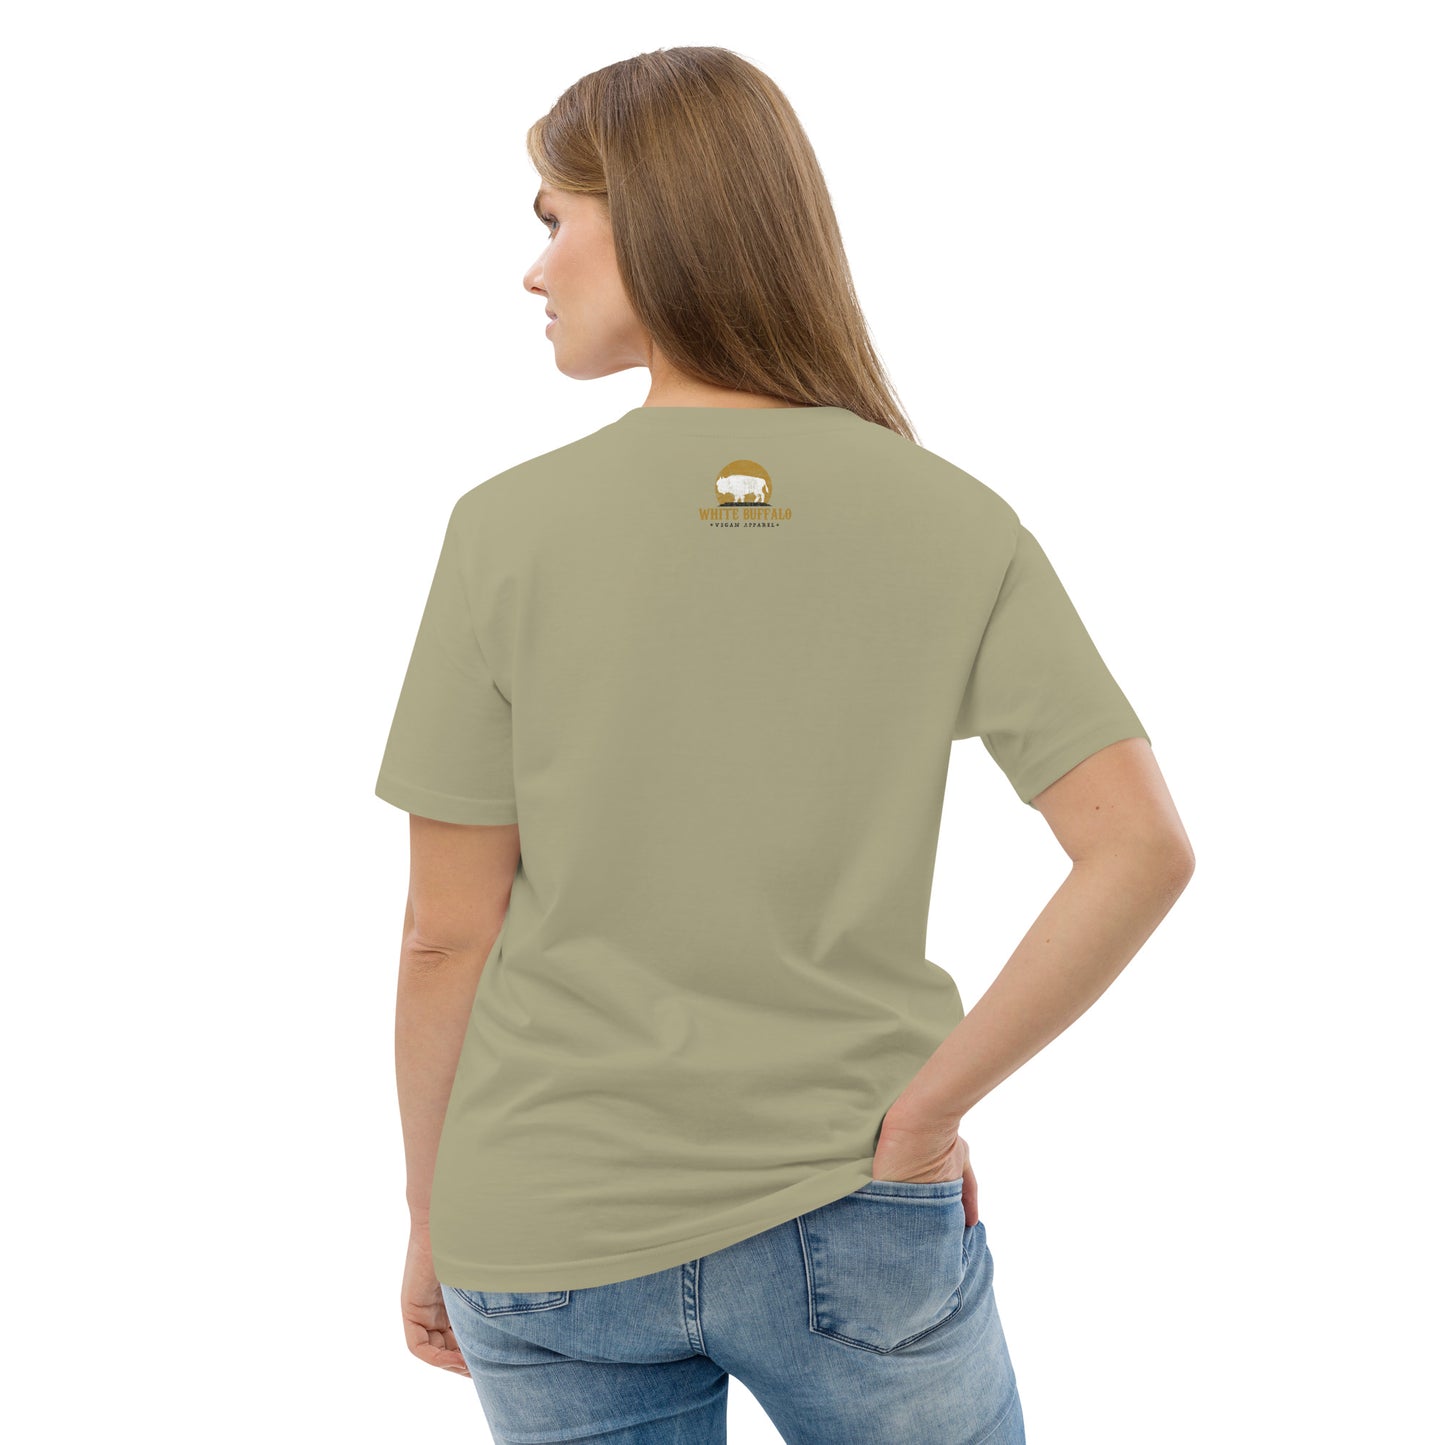 Delicious - Unisex organic cotton t-shirt